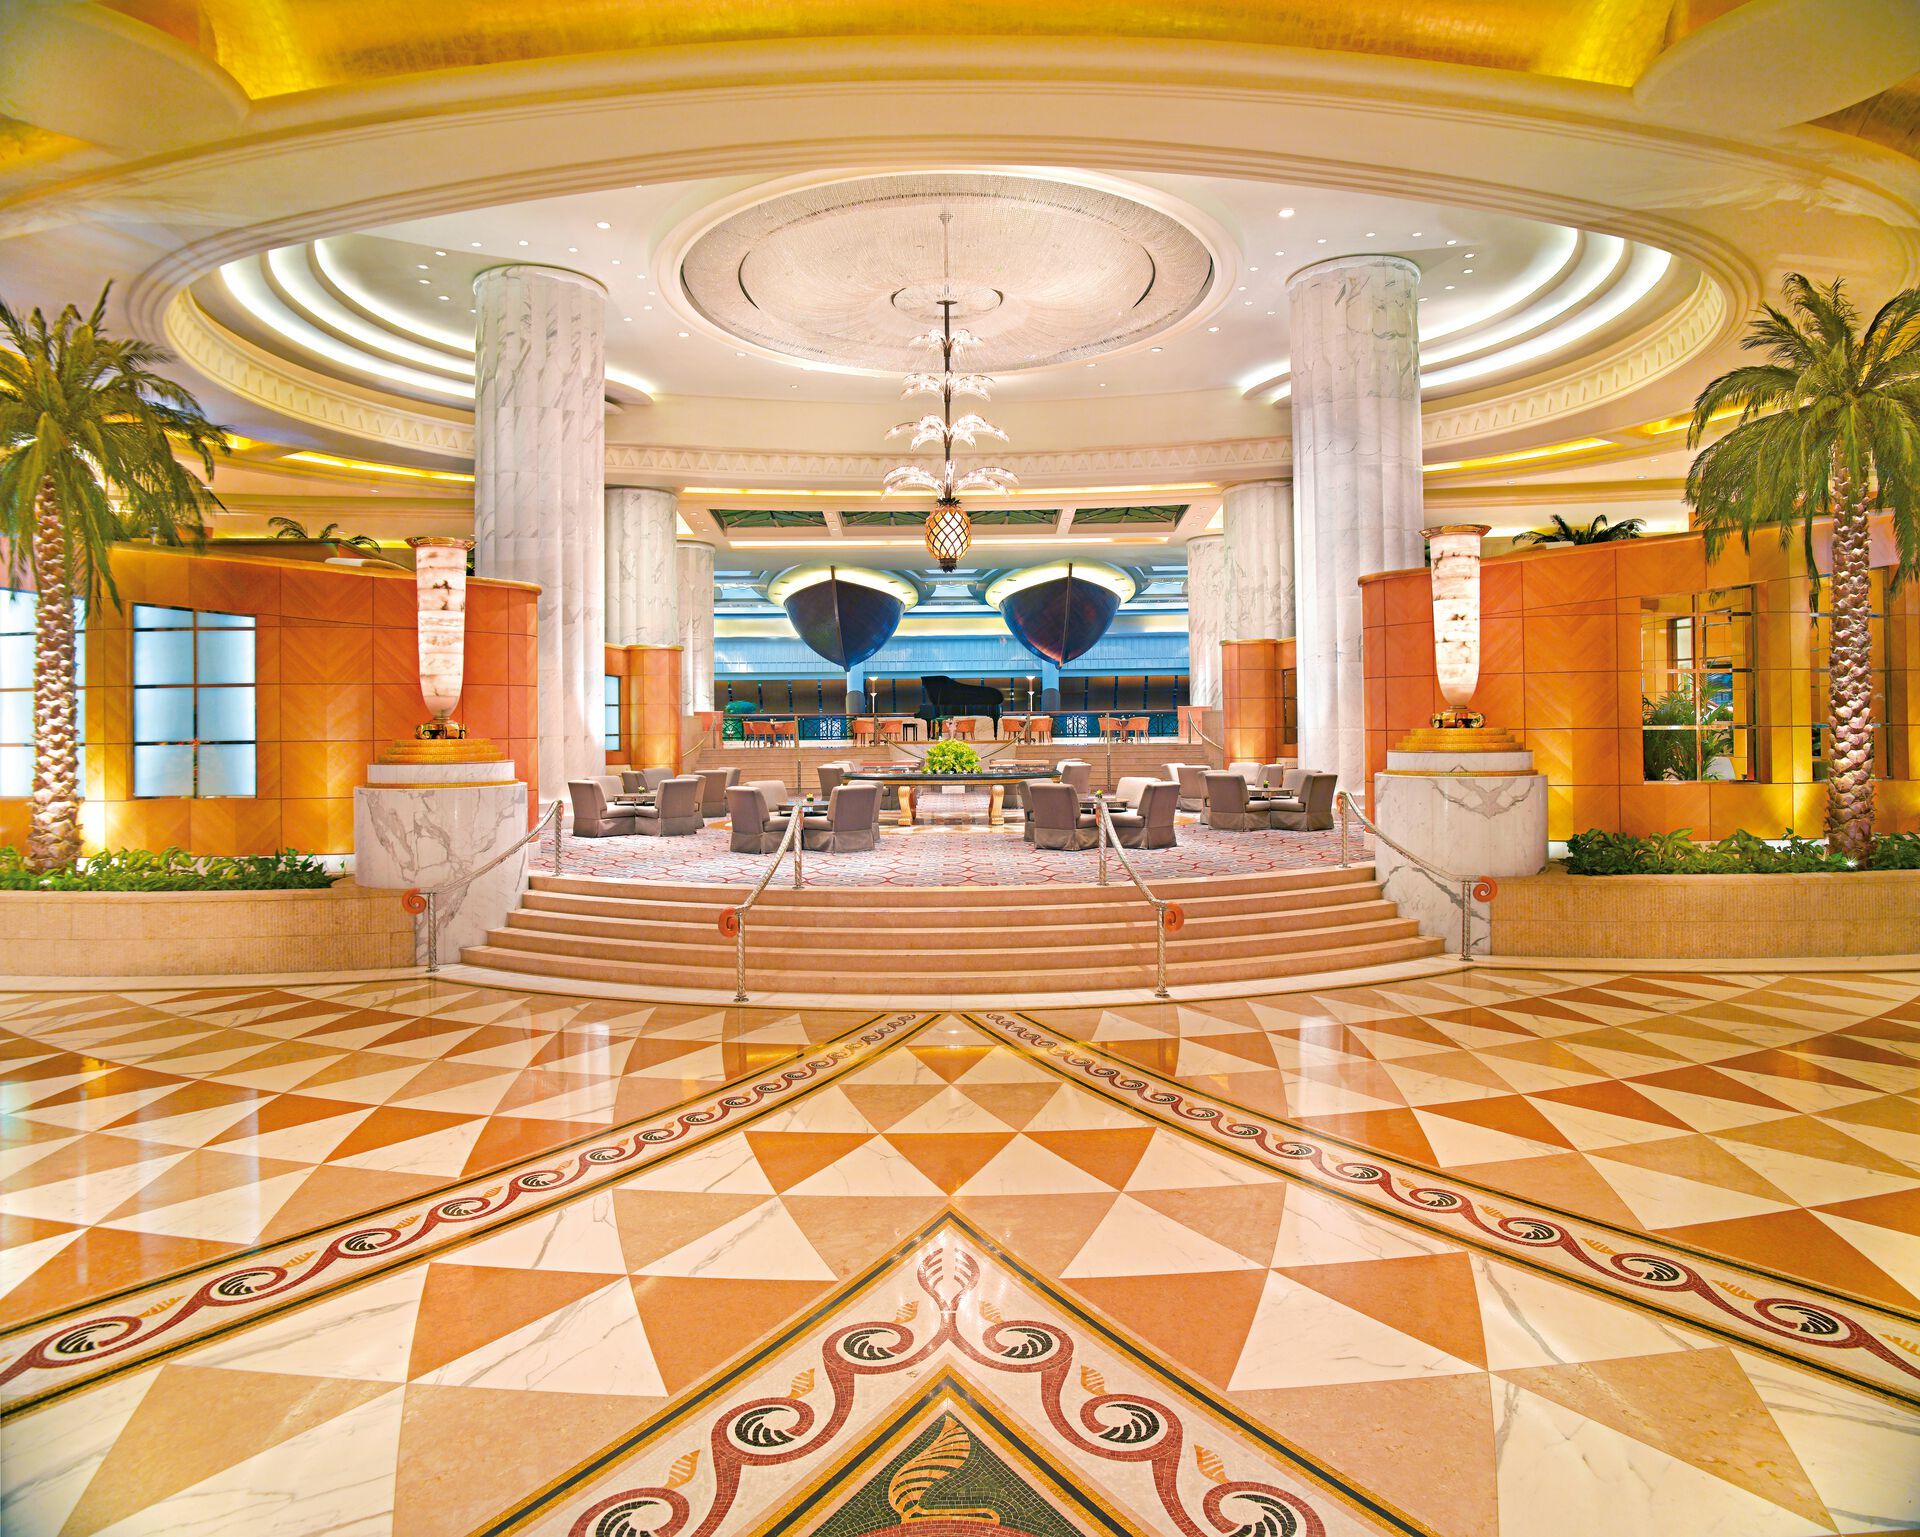 Emirats Arabes Unis - Dubaï - Hôtel Grand Hyatt Dubai 5*